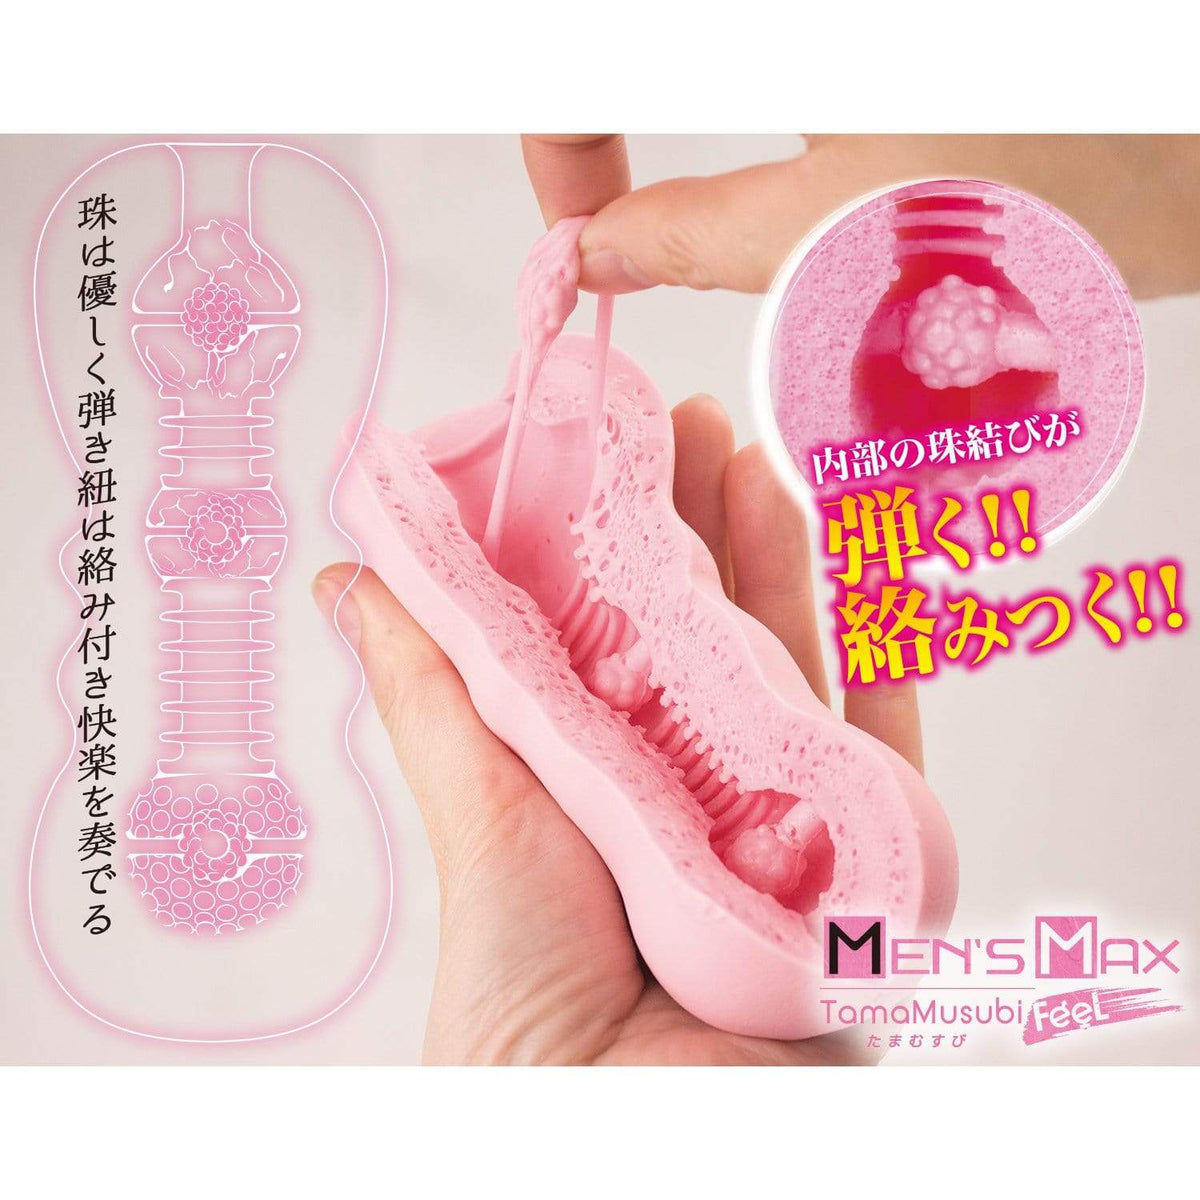 Men&#39;s Max - Tamamusubi Feel Soft Stroker Masturbator (Pink) MM1018 CherryAffairs